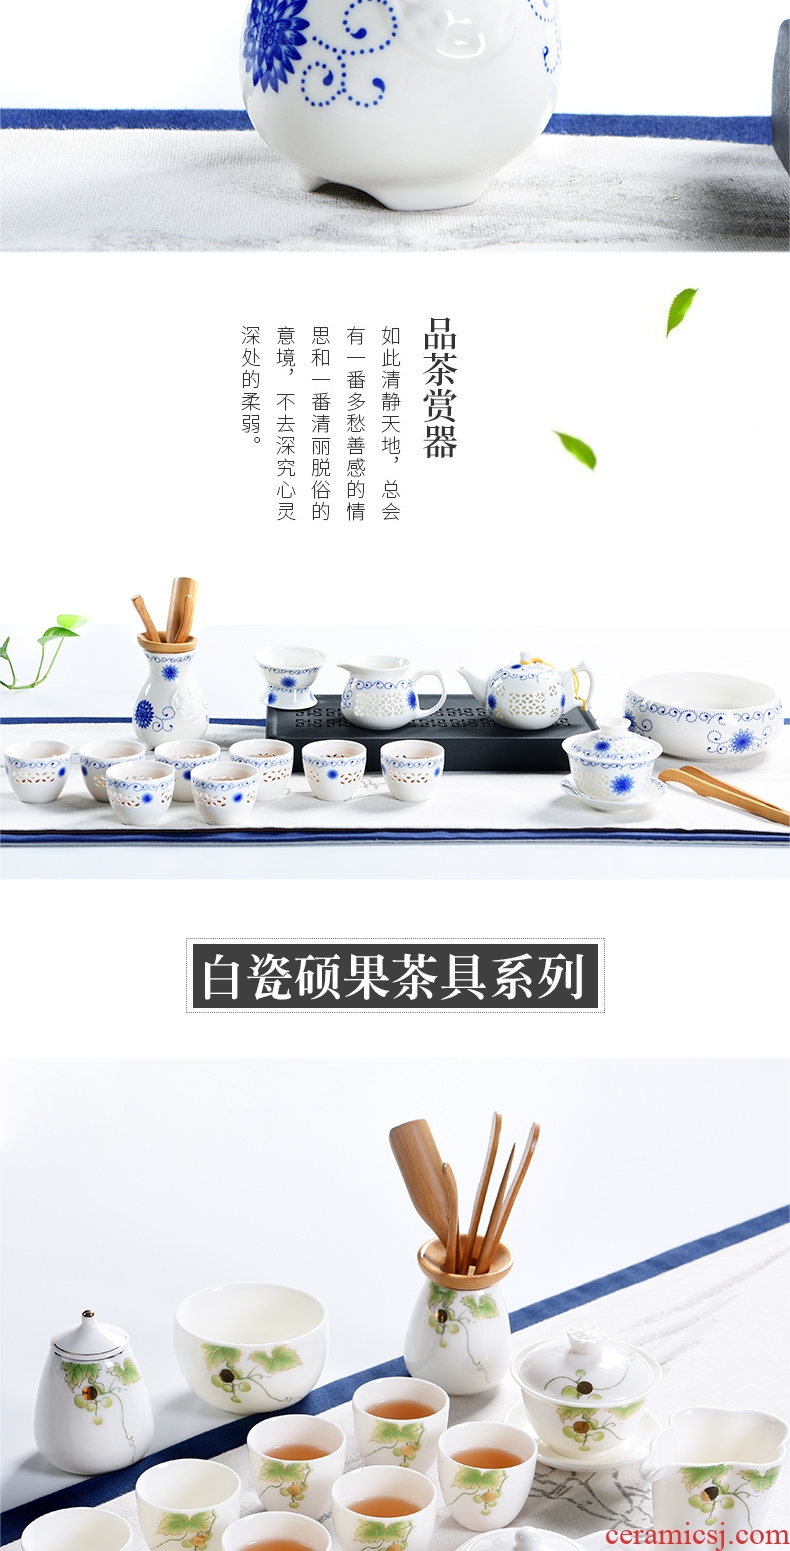 Porcelain god elder brother kiln ceramic kung fu tea set tea cups household contracted a complete set of tea POTS with zero 6 gentleman